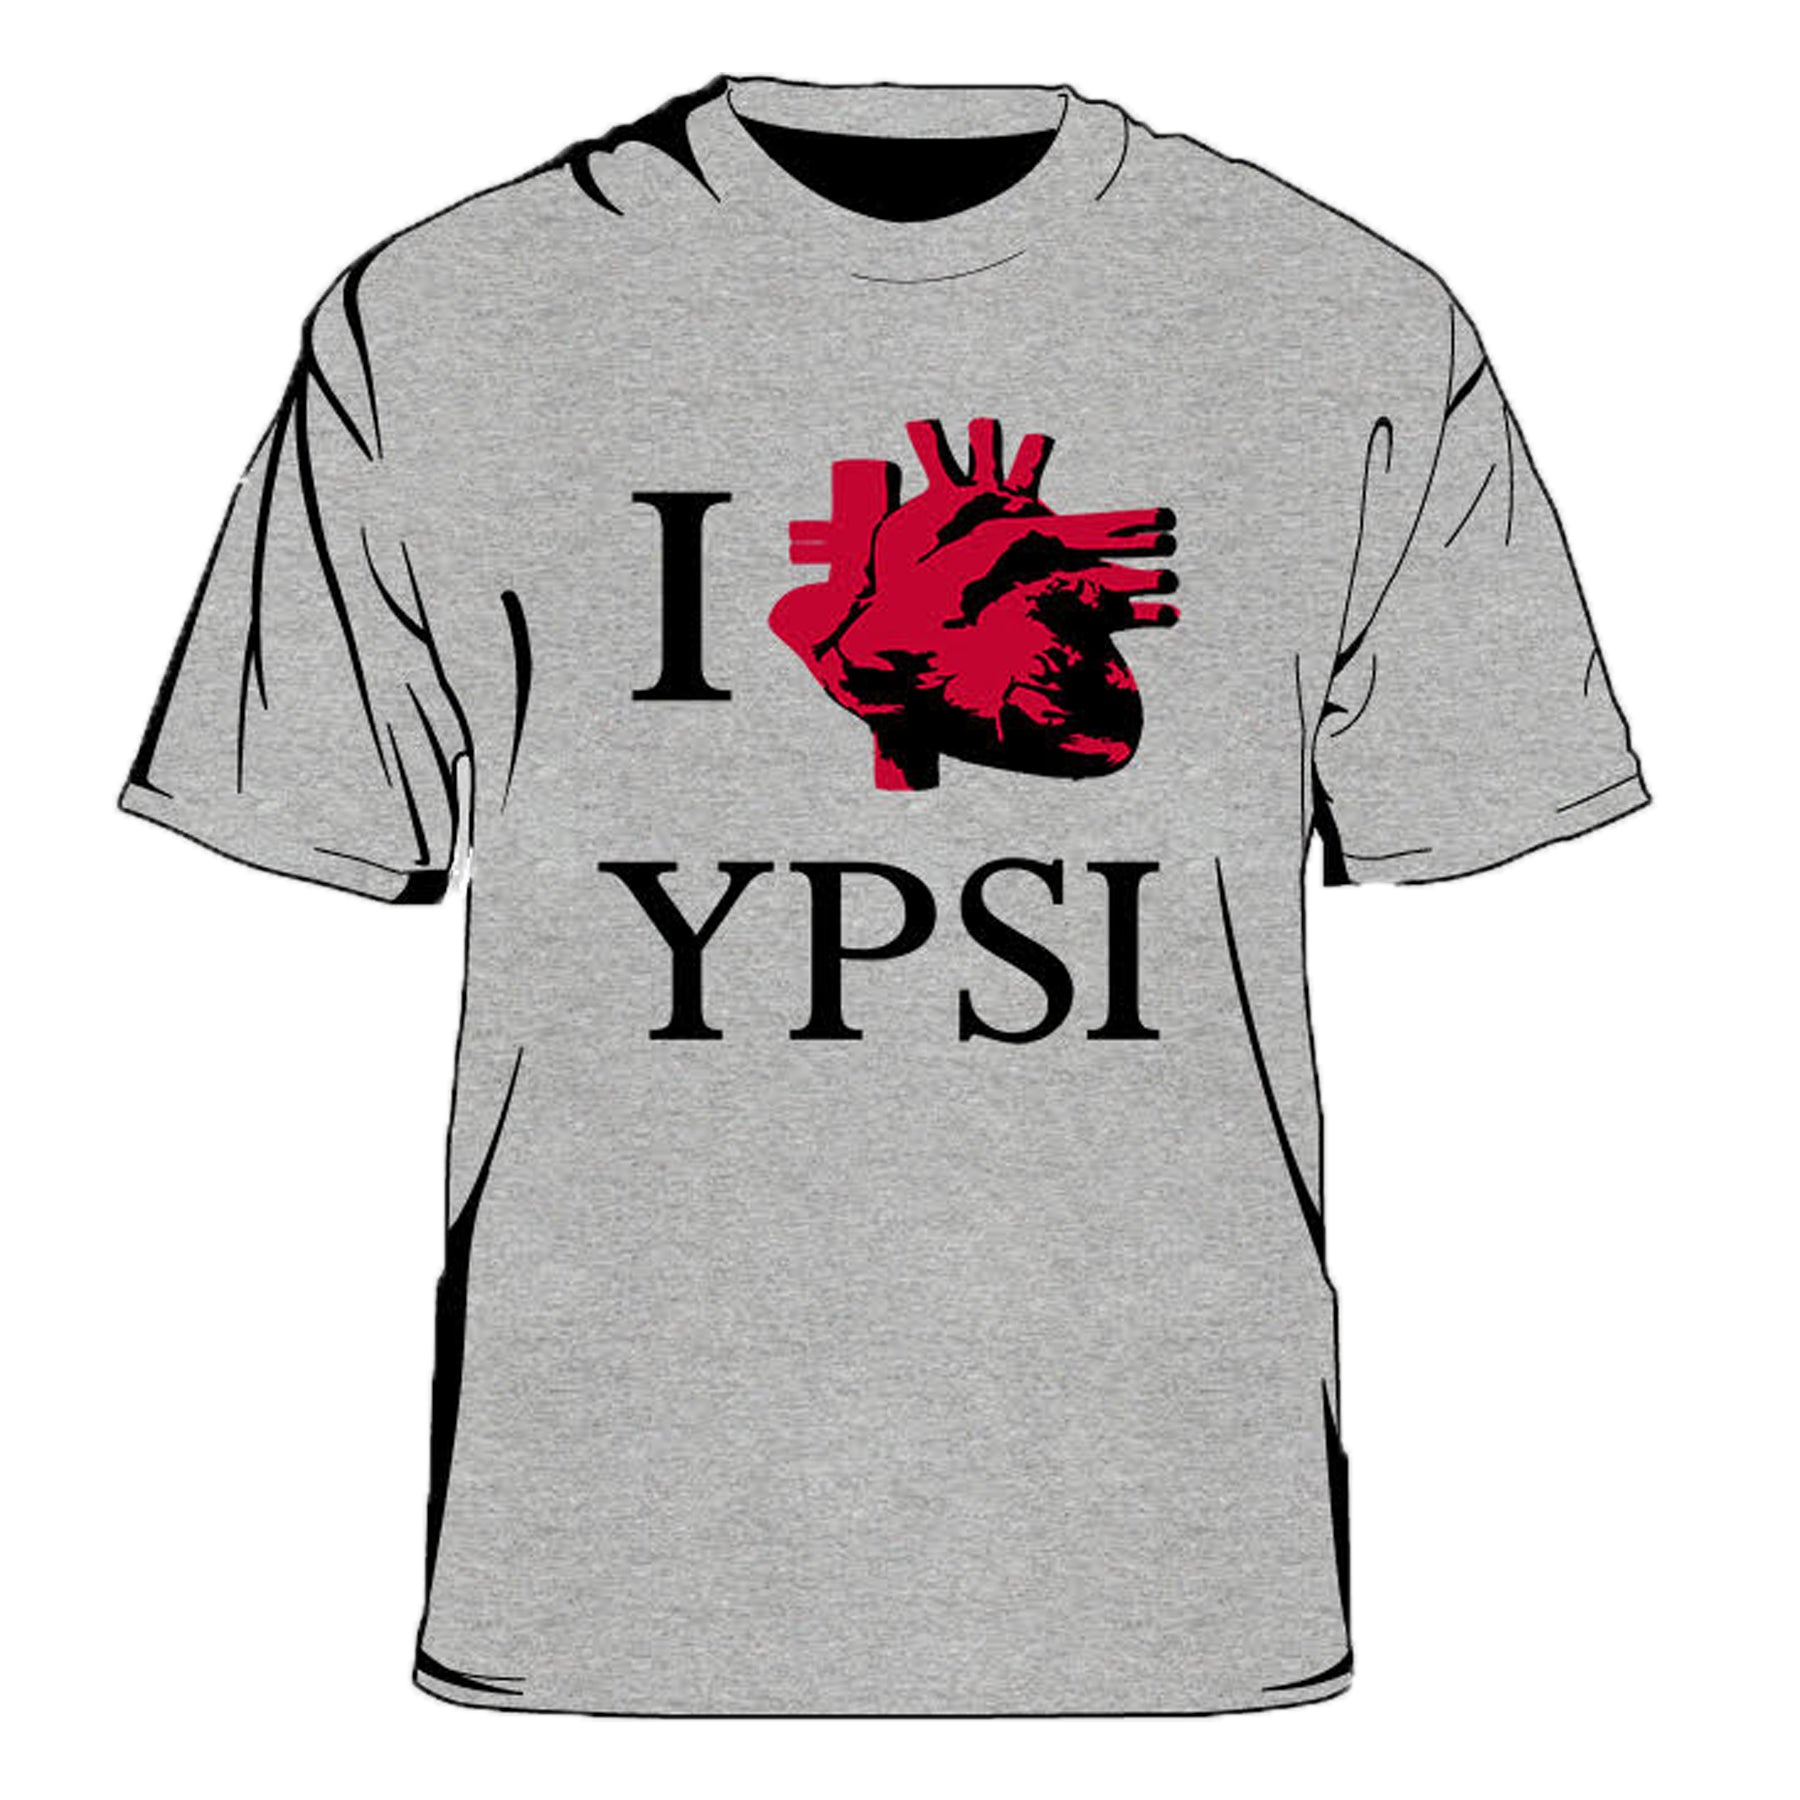 I Real Heart Ypsl Men's T-Shirt